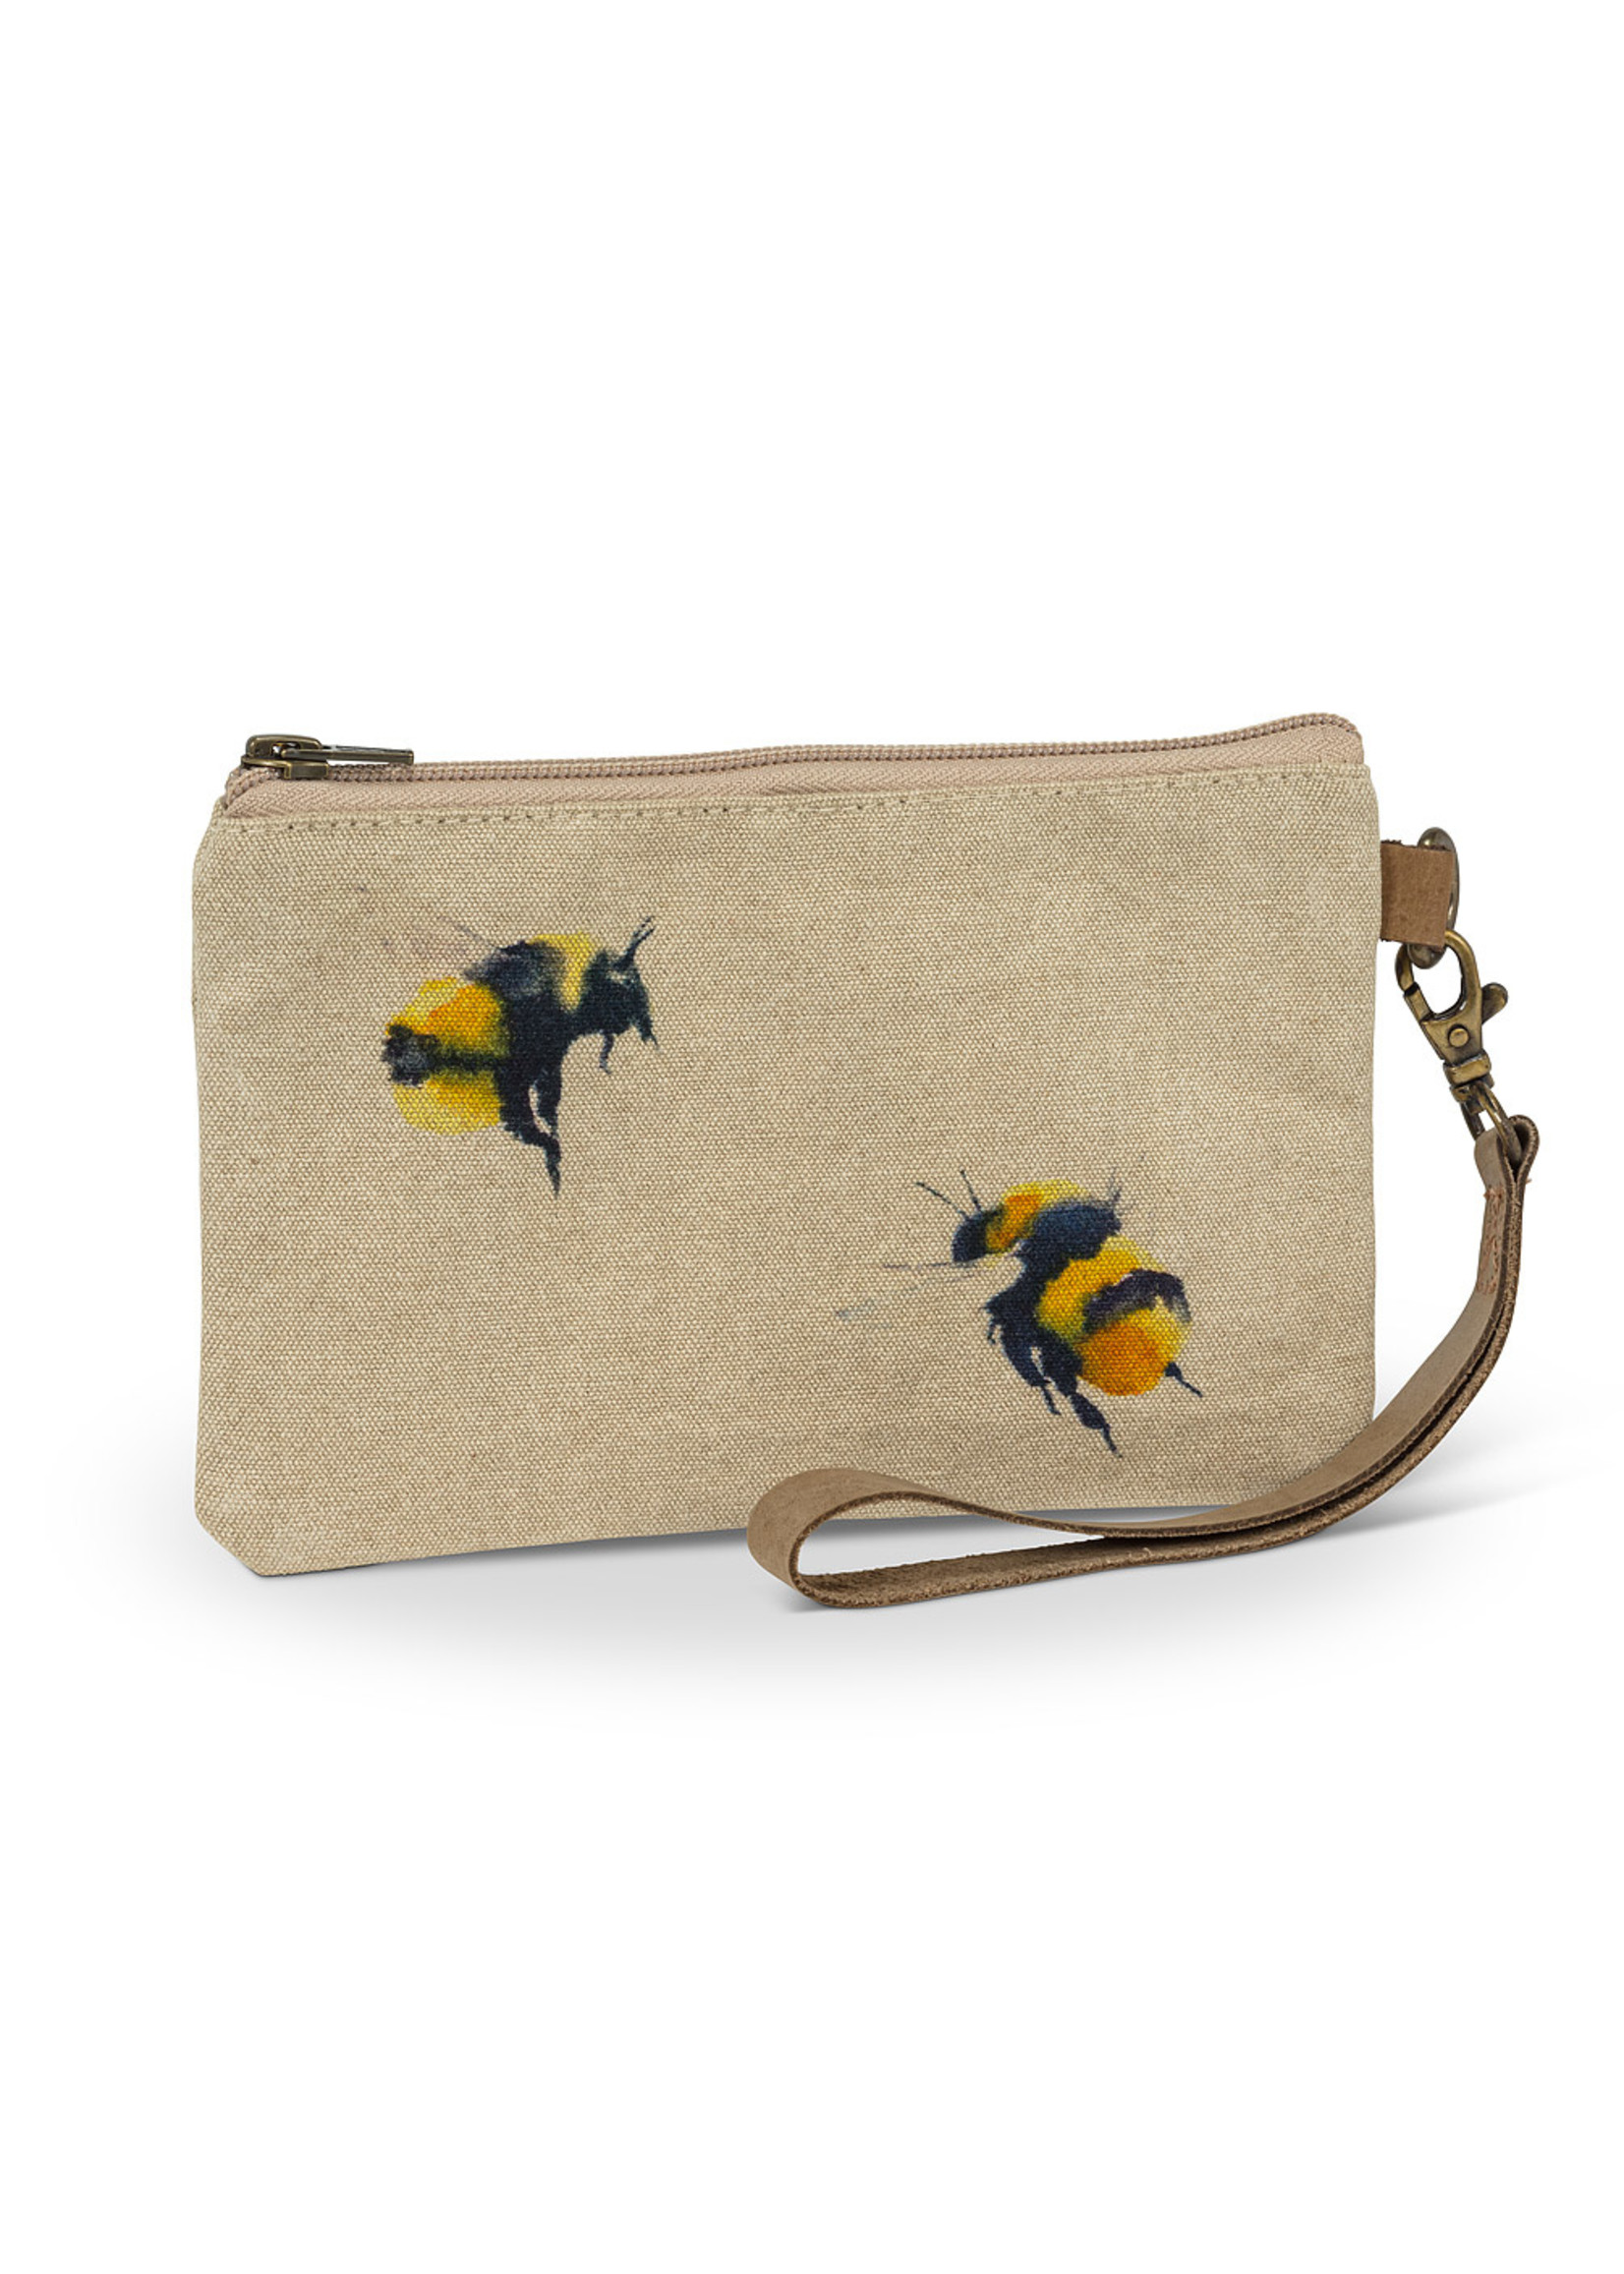 Bee zip pouch w/strap 5x8"